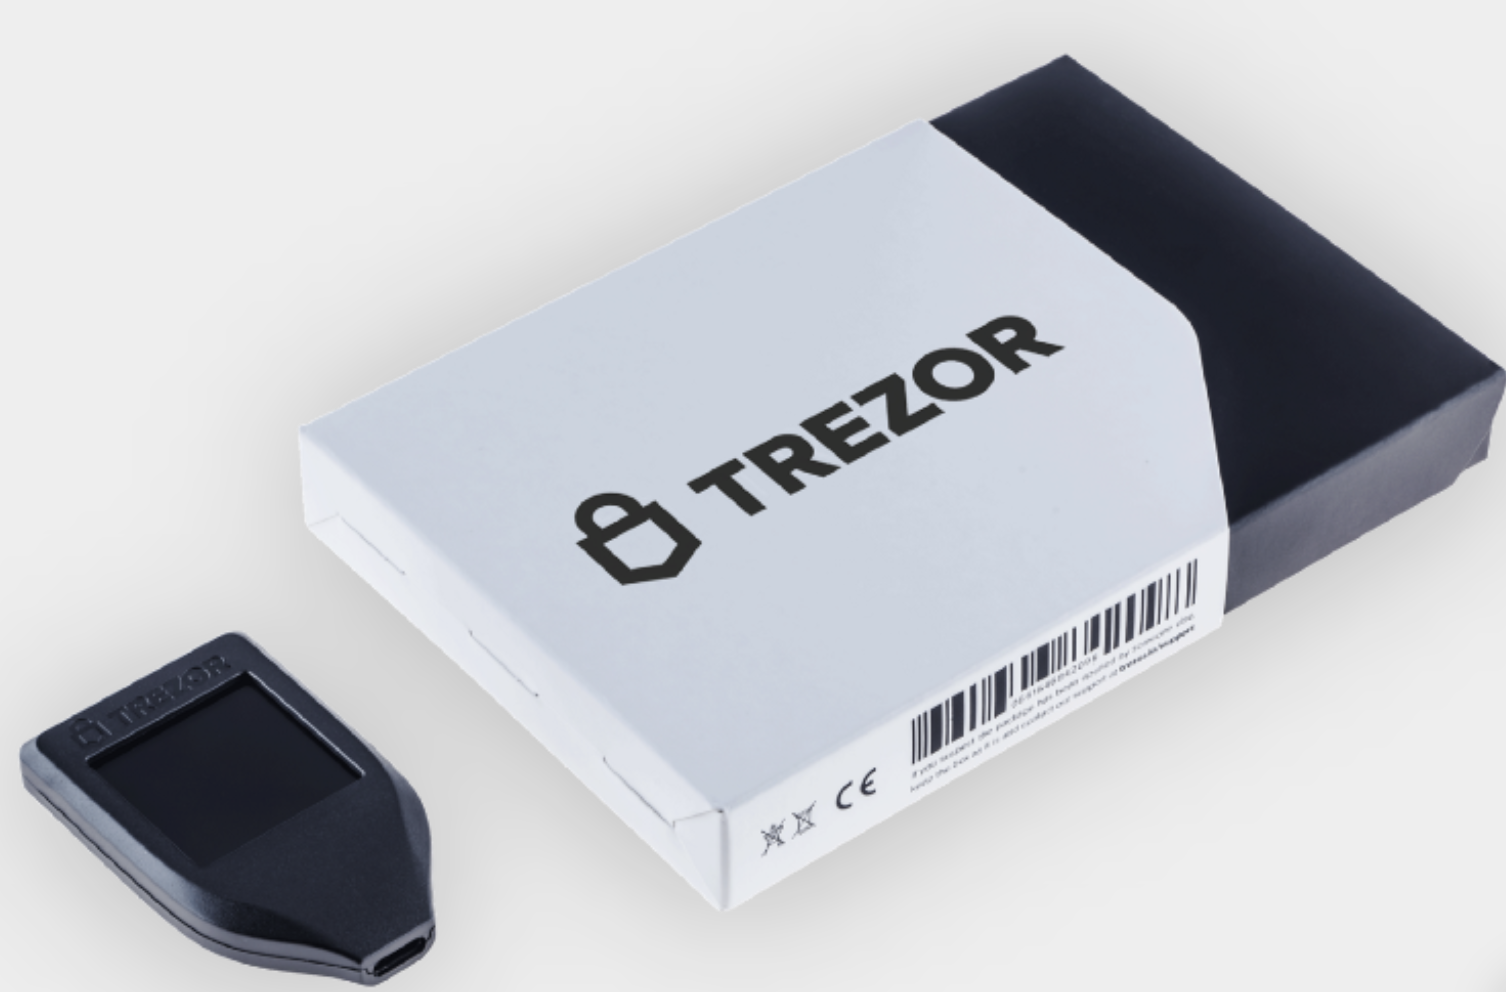 Image showing Trezor Model T hardware wallet’s packaging.